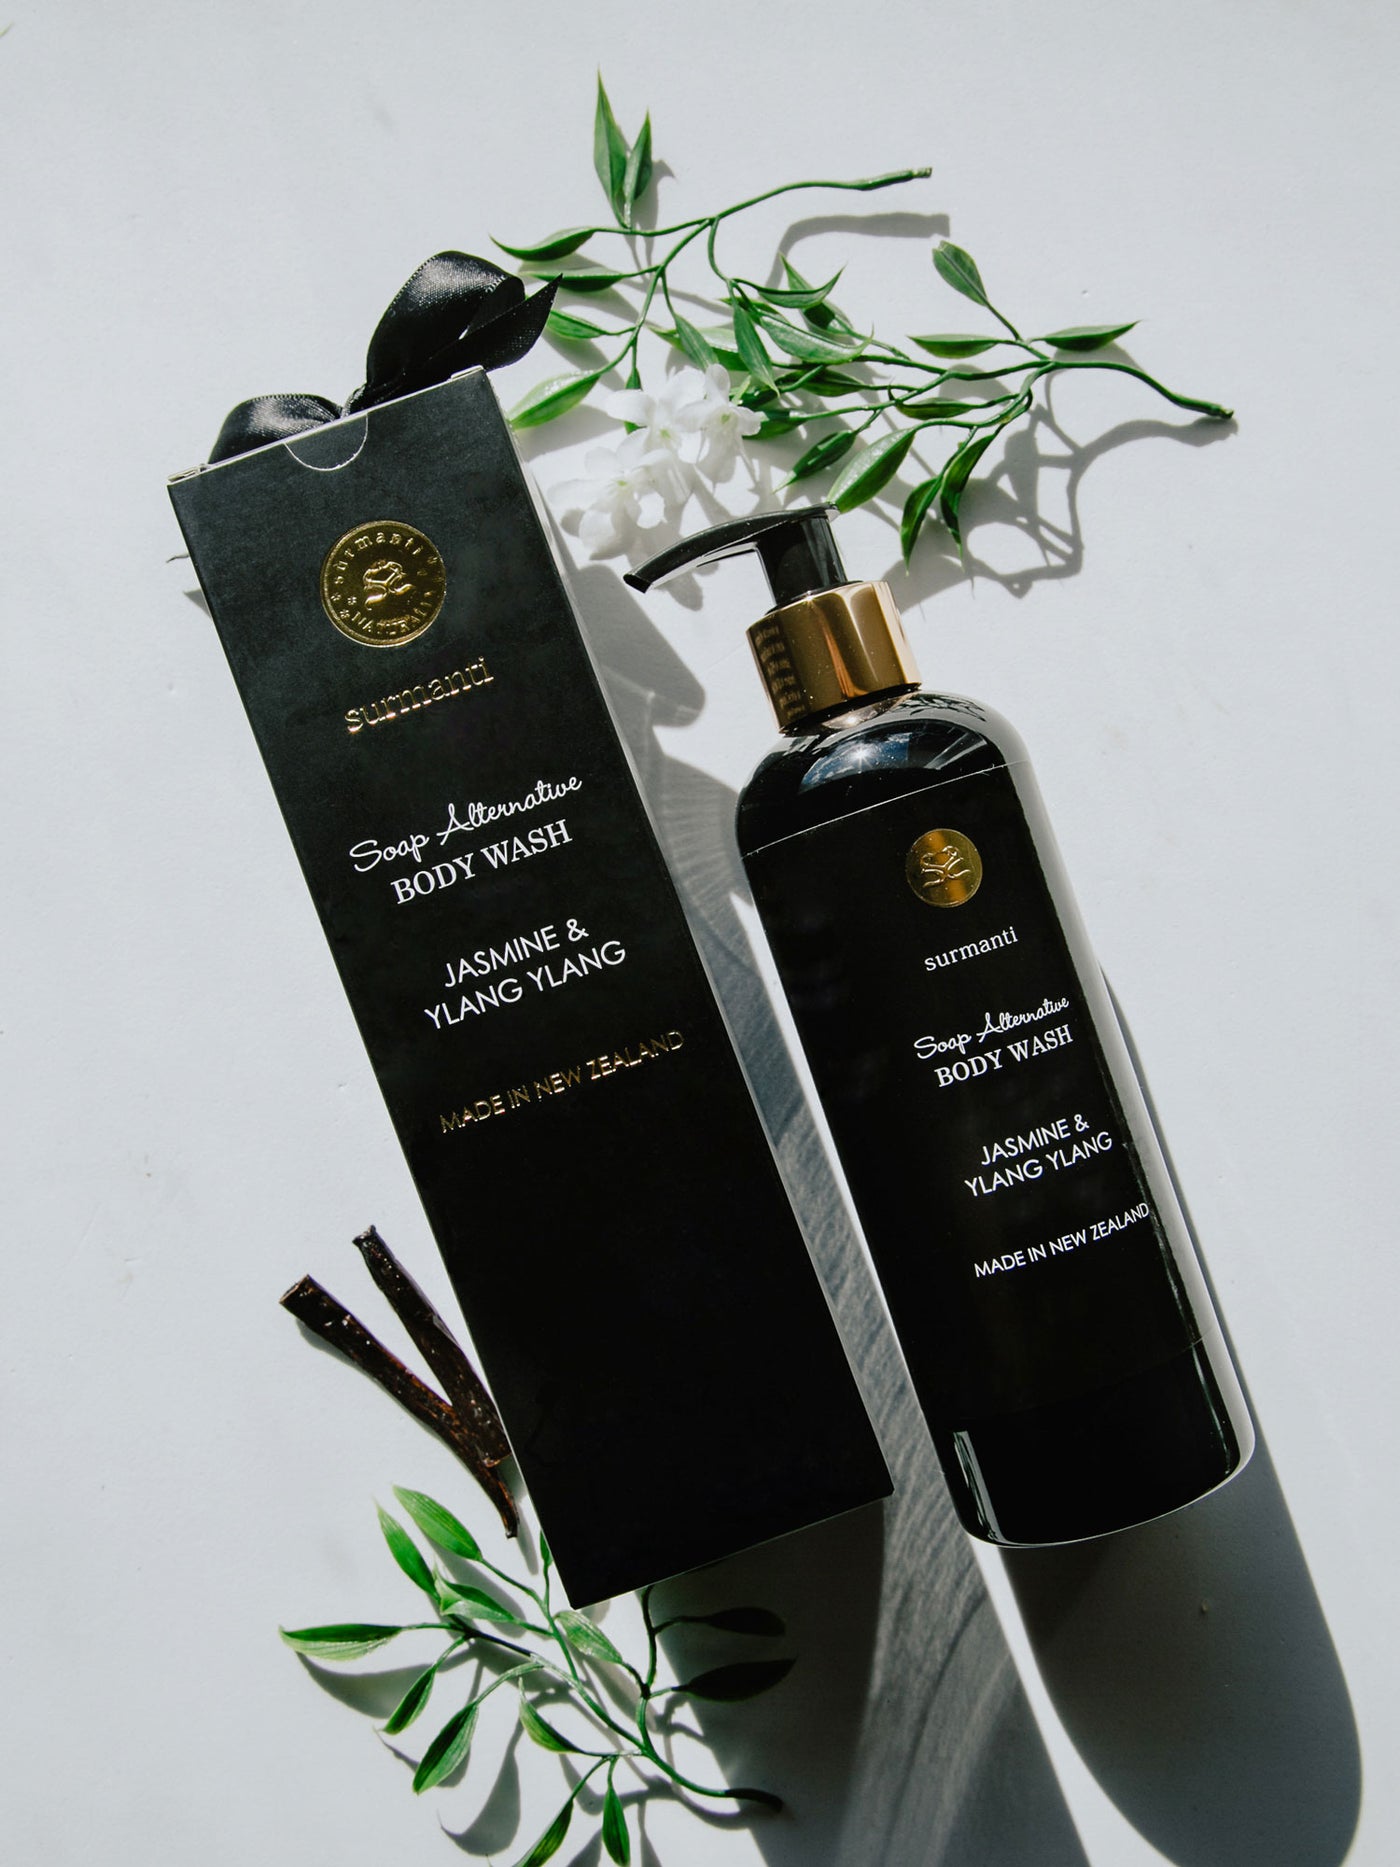 Jasmine & Ylang Ylang Body Wash - Soap Alternative 300ml - Surmanti - Made In New Zealand